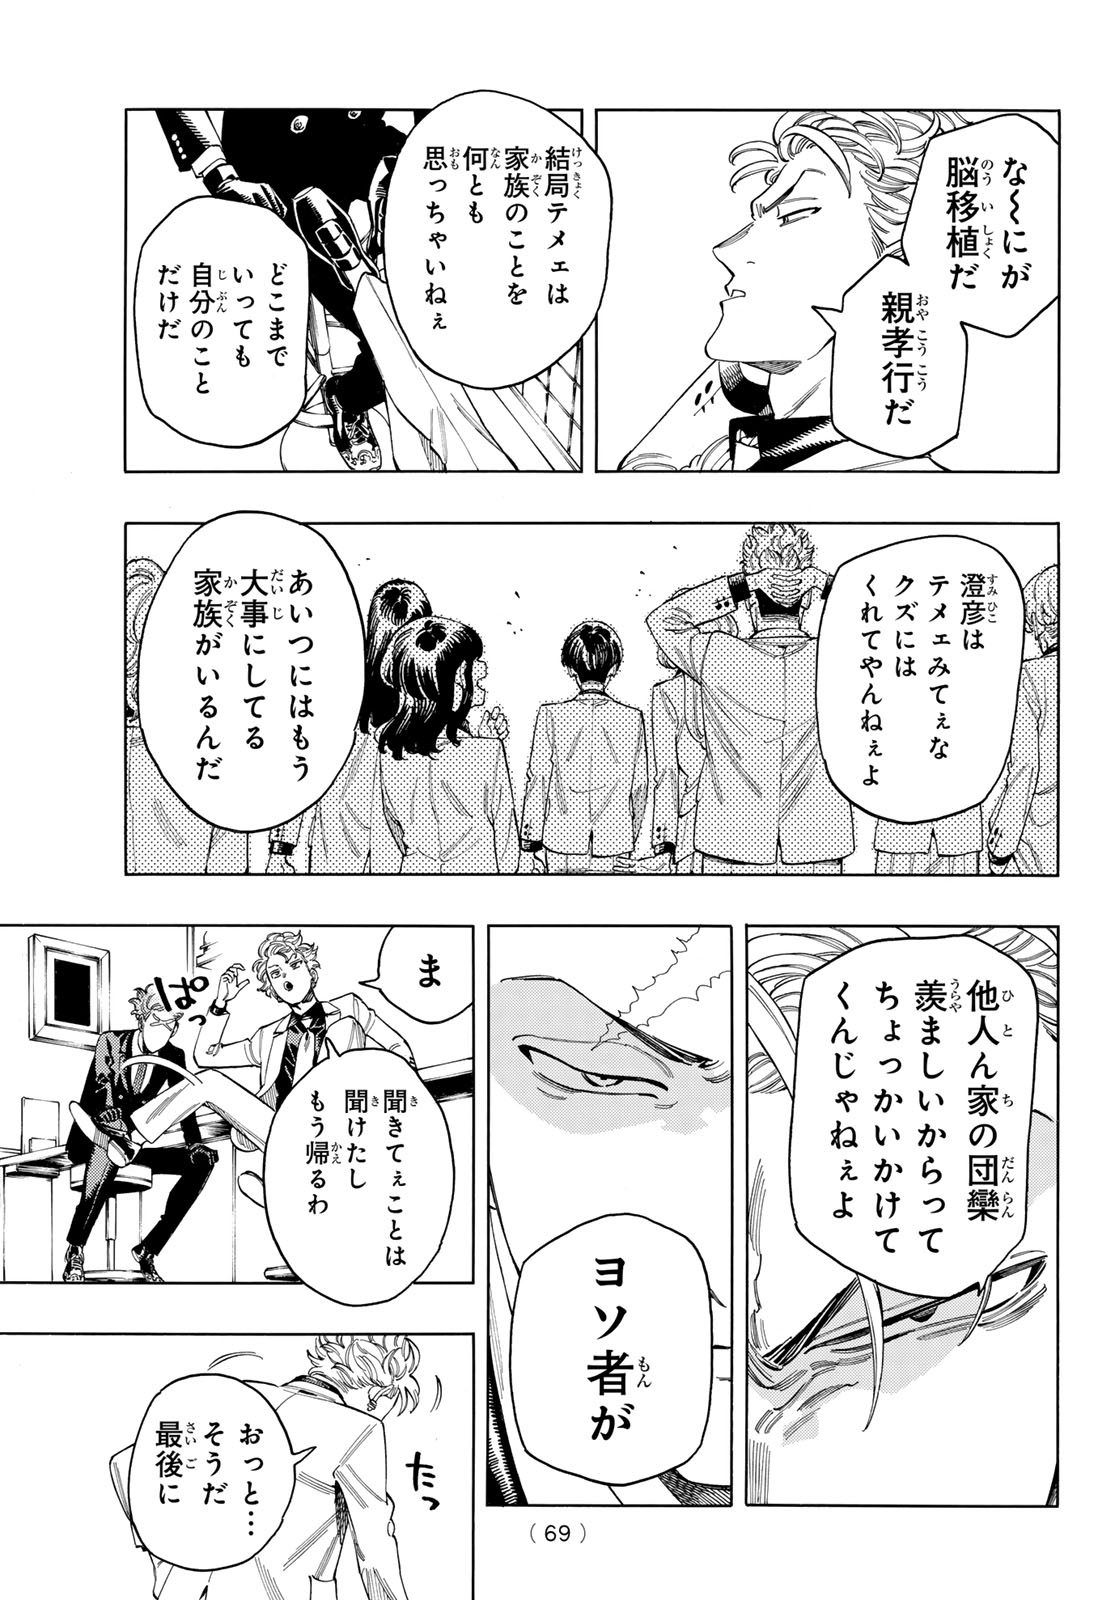 Akabane Honeko no Bodyguard - Chapter 85 - Page 11